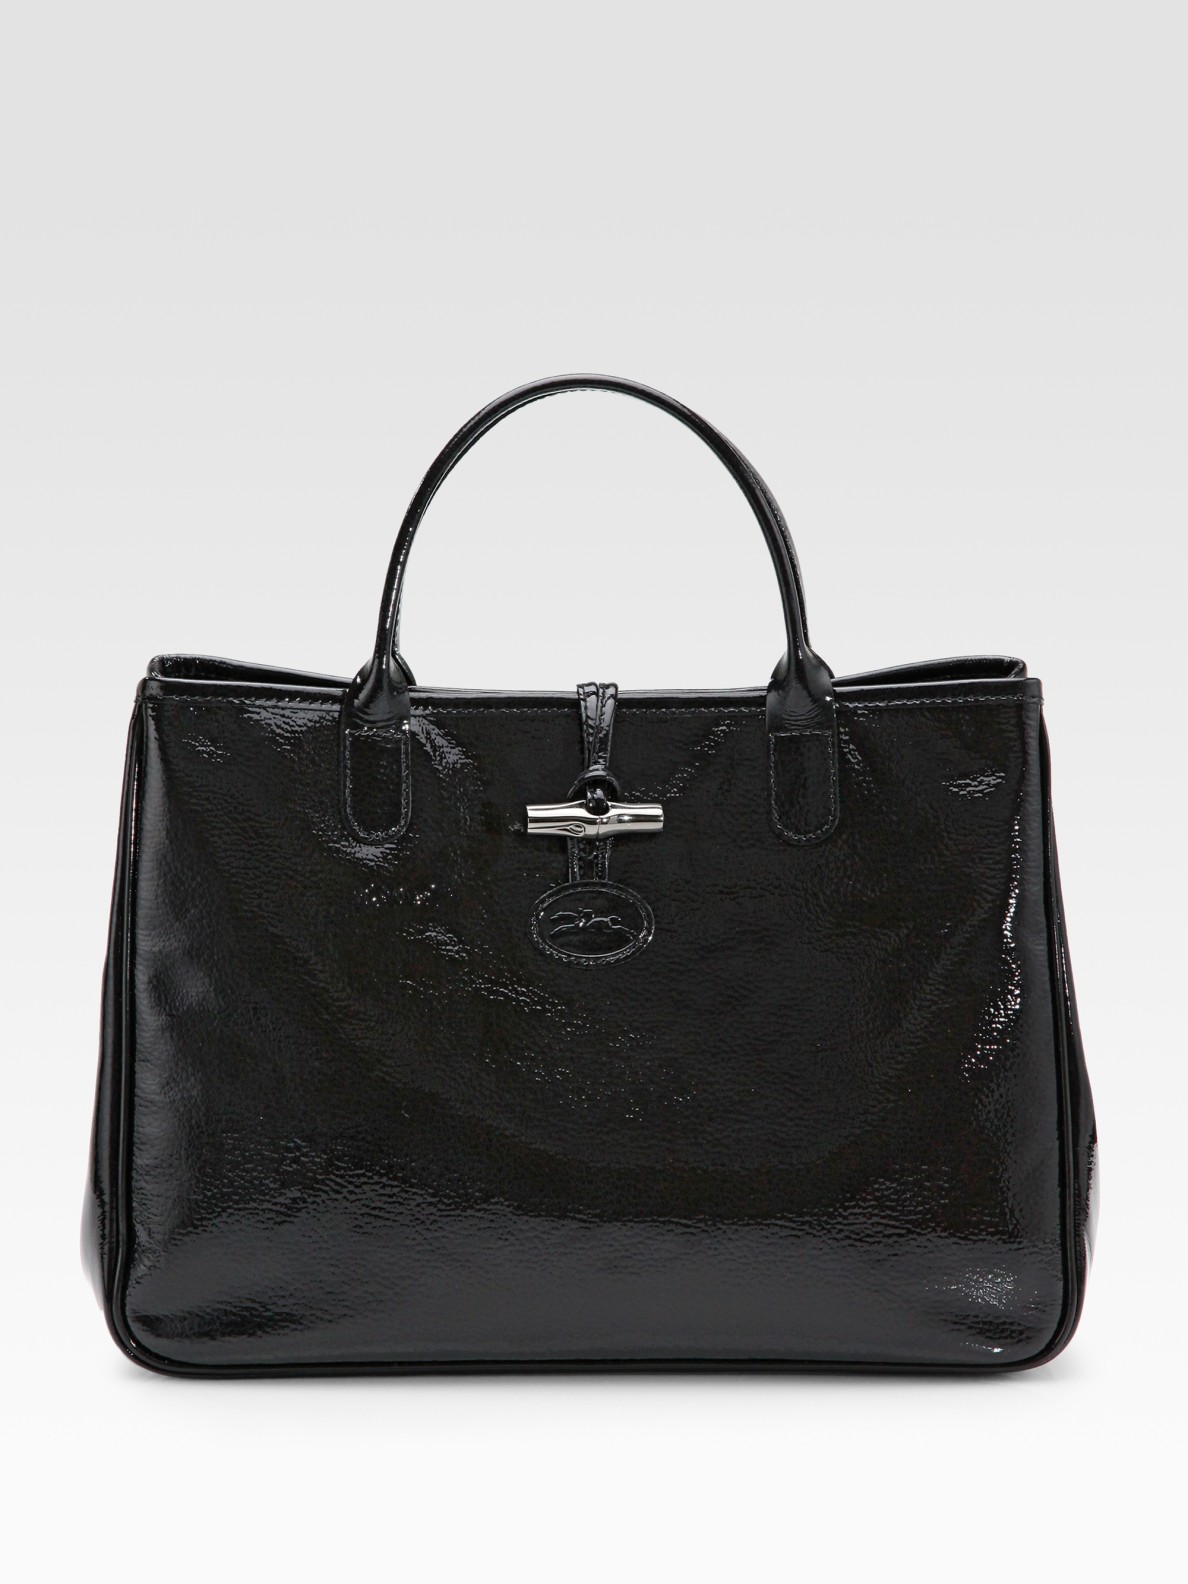 Roseau Vernis Patent Leather Tote Bag